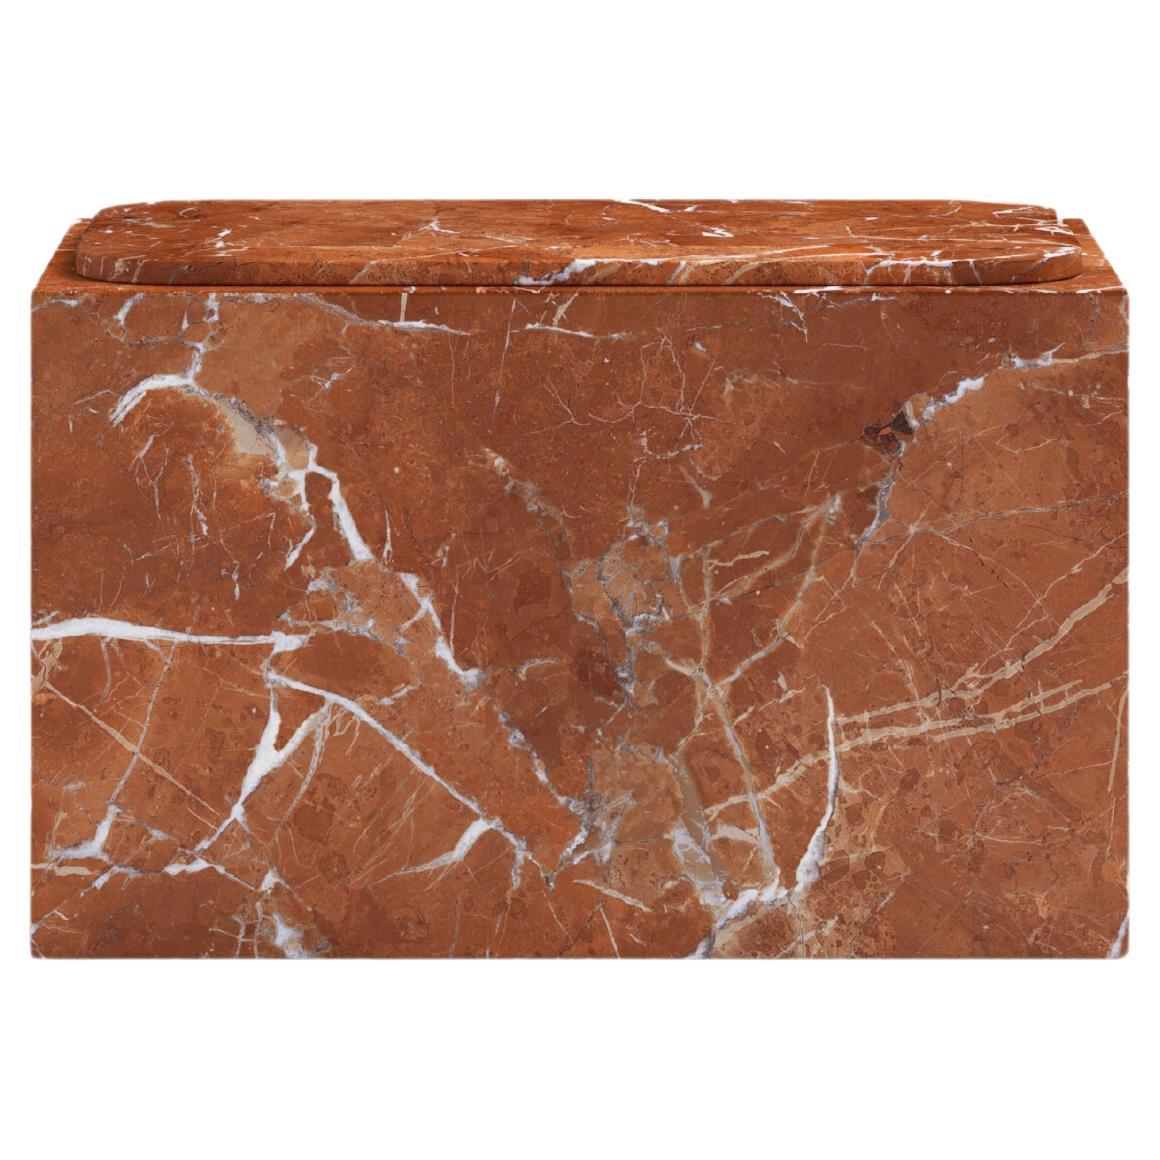 FORM(LA) Cubo Rectangle Side Table 30”L x 16"W x 19”H Rojo Alicante Marble For Sale